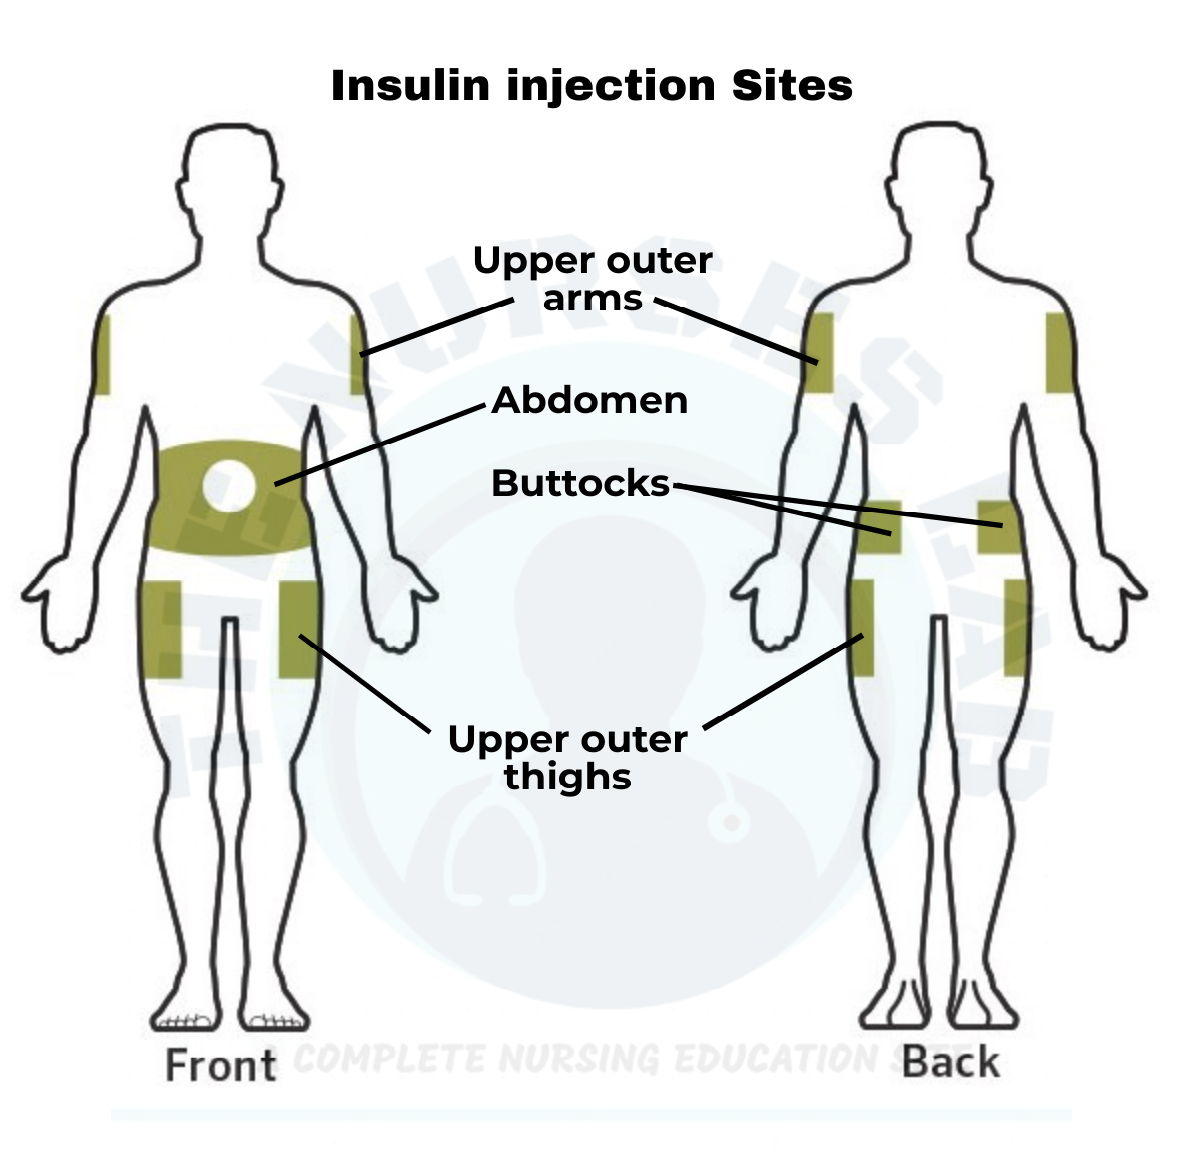 INSULIN (Pharmacotherapy for Type 1 Diabetes Mellitus)